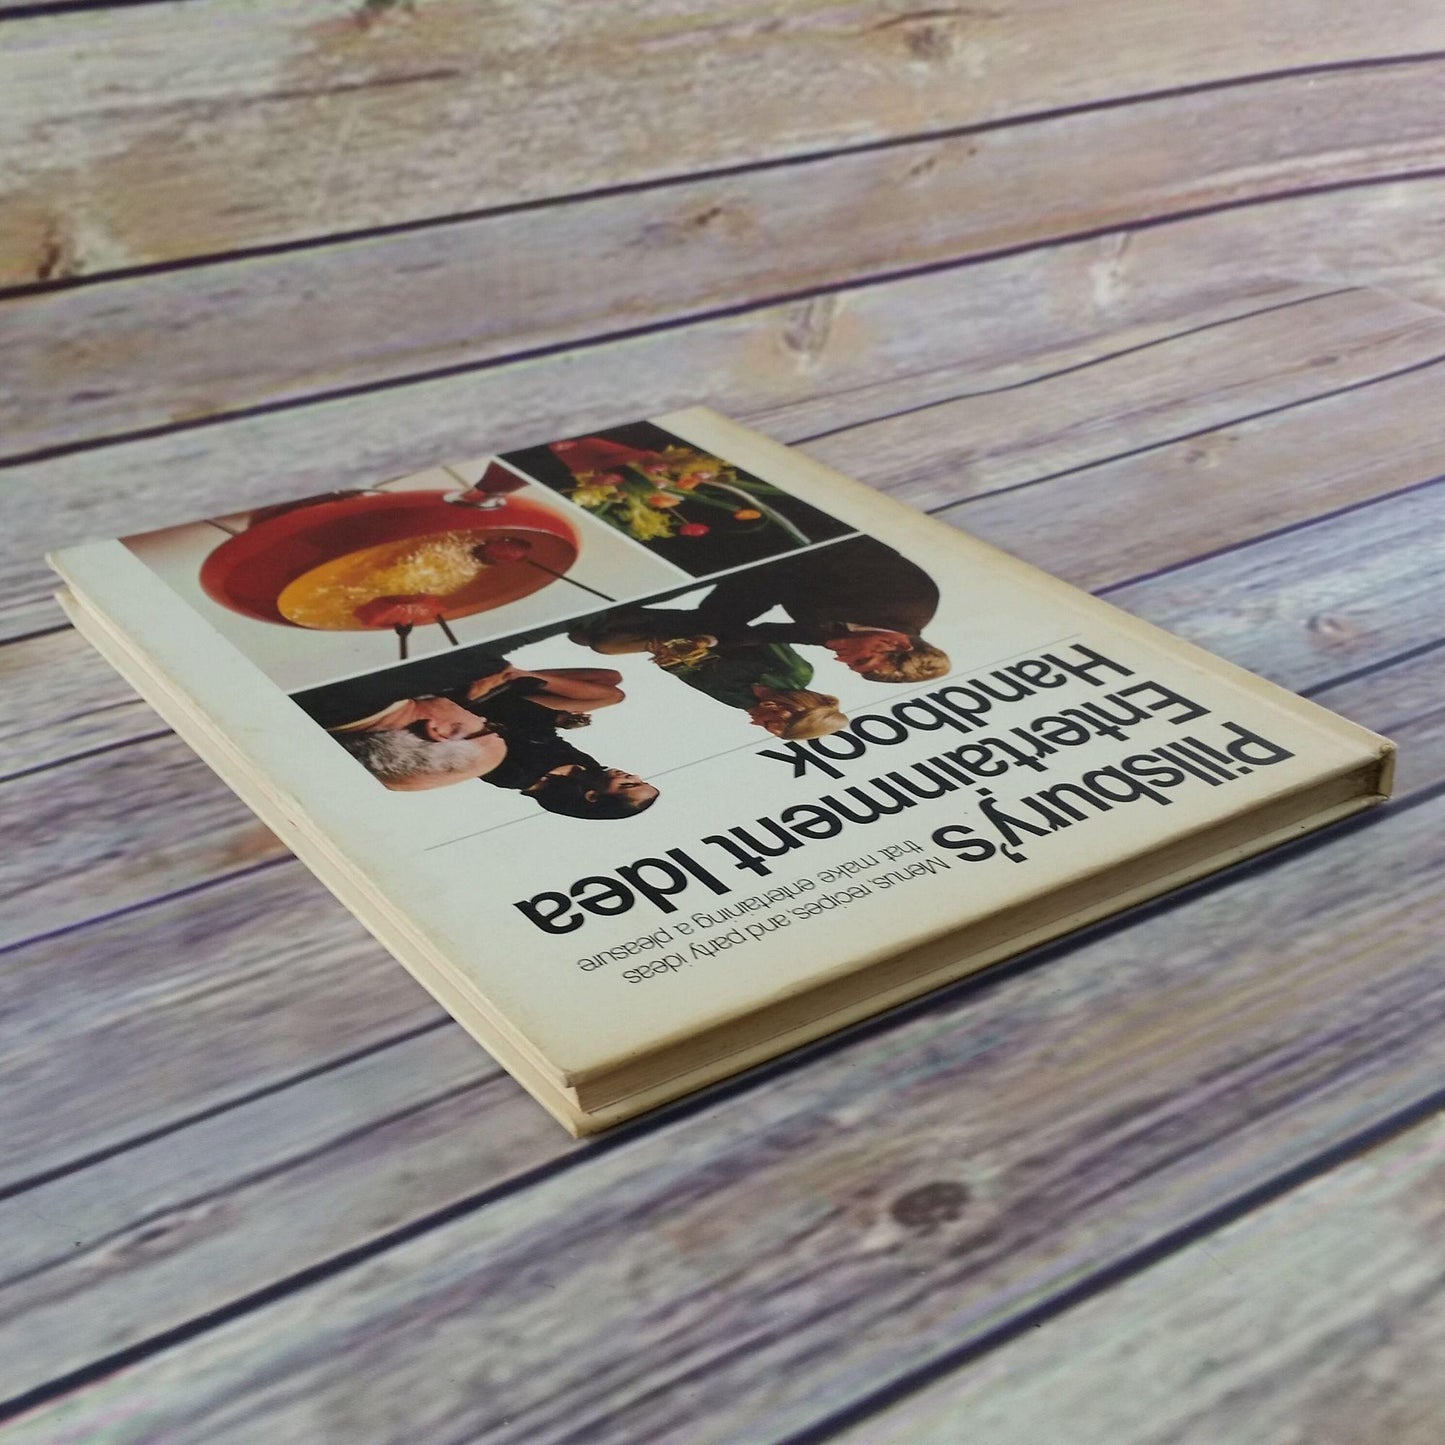 Vintage Cookbook Pillsbury Entertainment Idea Handbook Recipes Hardcover 1970 Meat Recipes and Menu Ideas for Entertaining